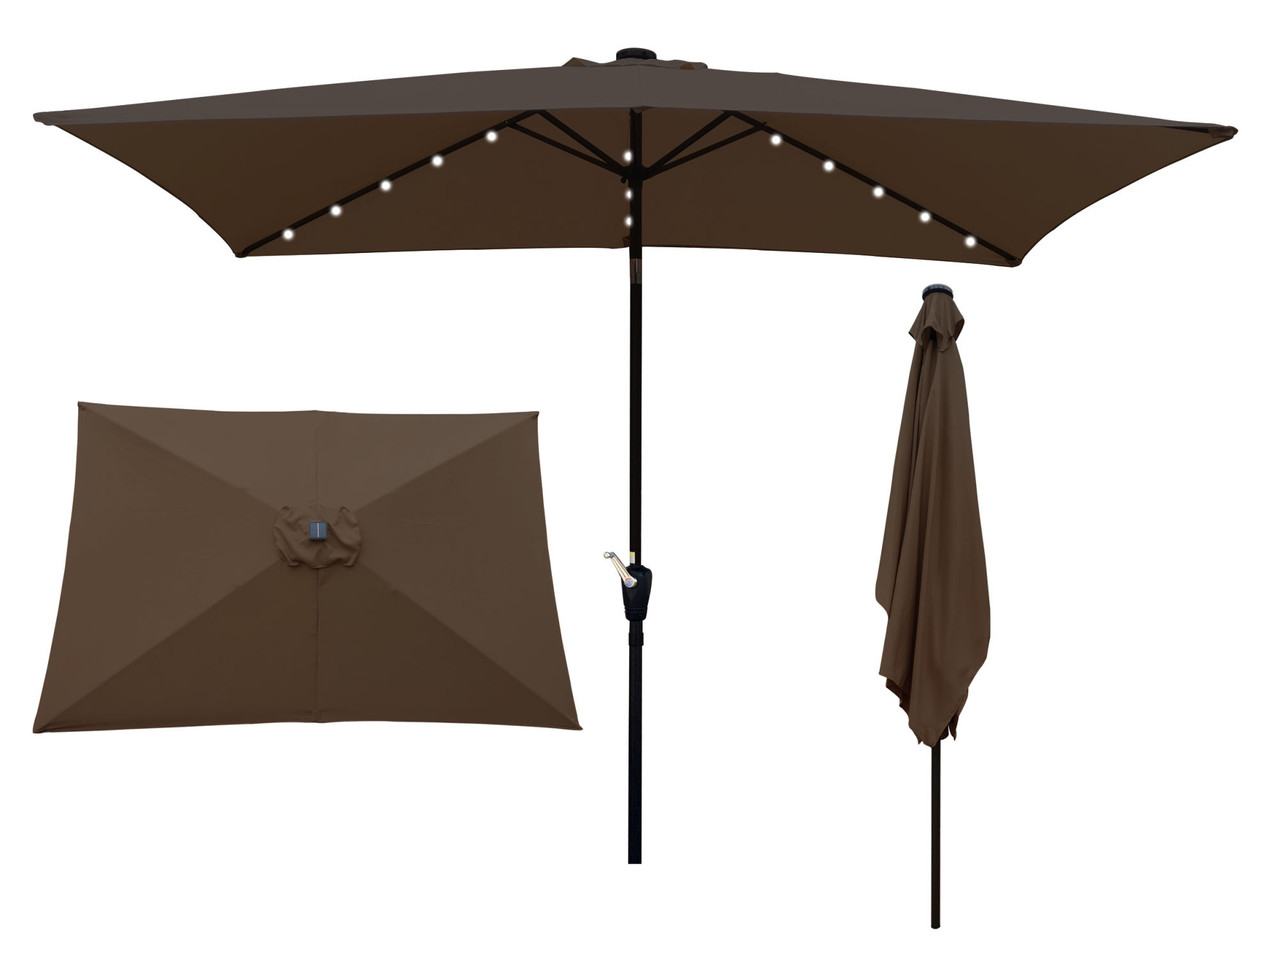 10 x 6.5ft Rectangular Patio Umbrella, Solar LED Lights, Waterproof with  Crank and Push Button Tilt, Chocolate Shade, Black Pole - PoolAndSpa.com